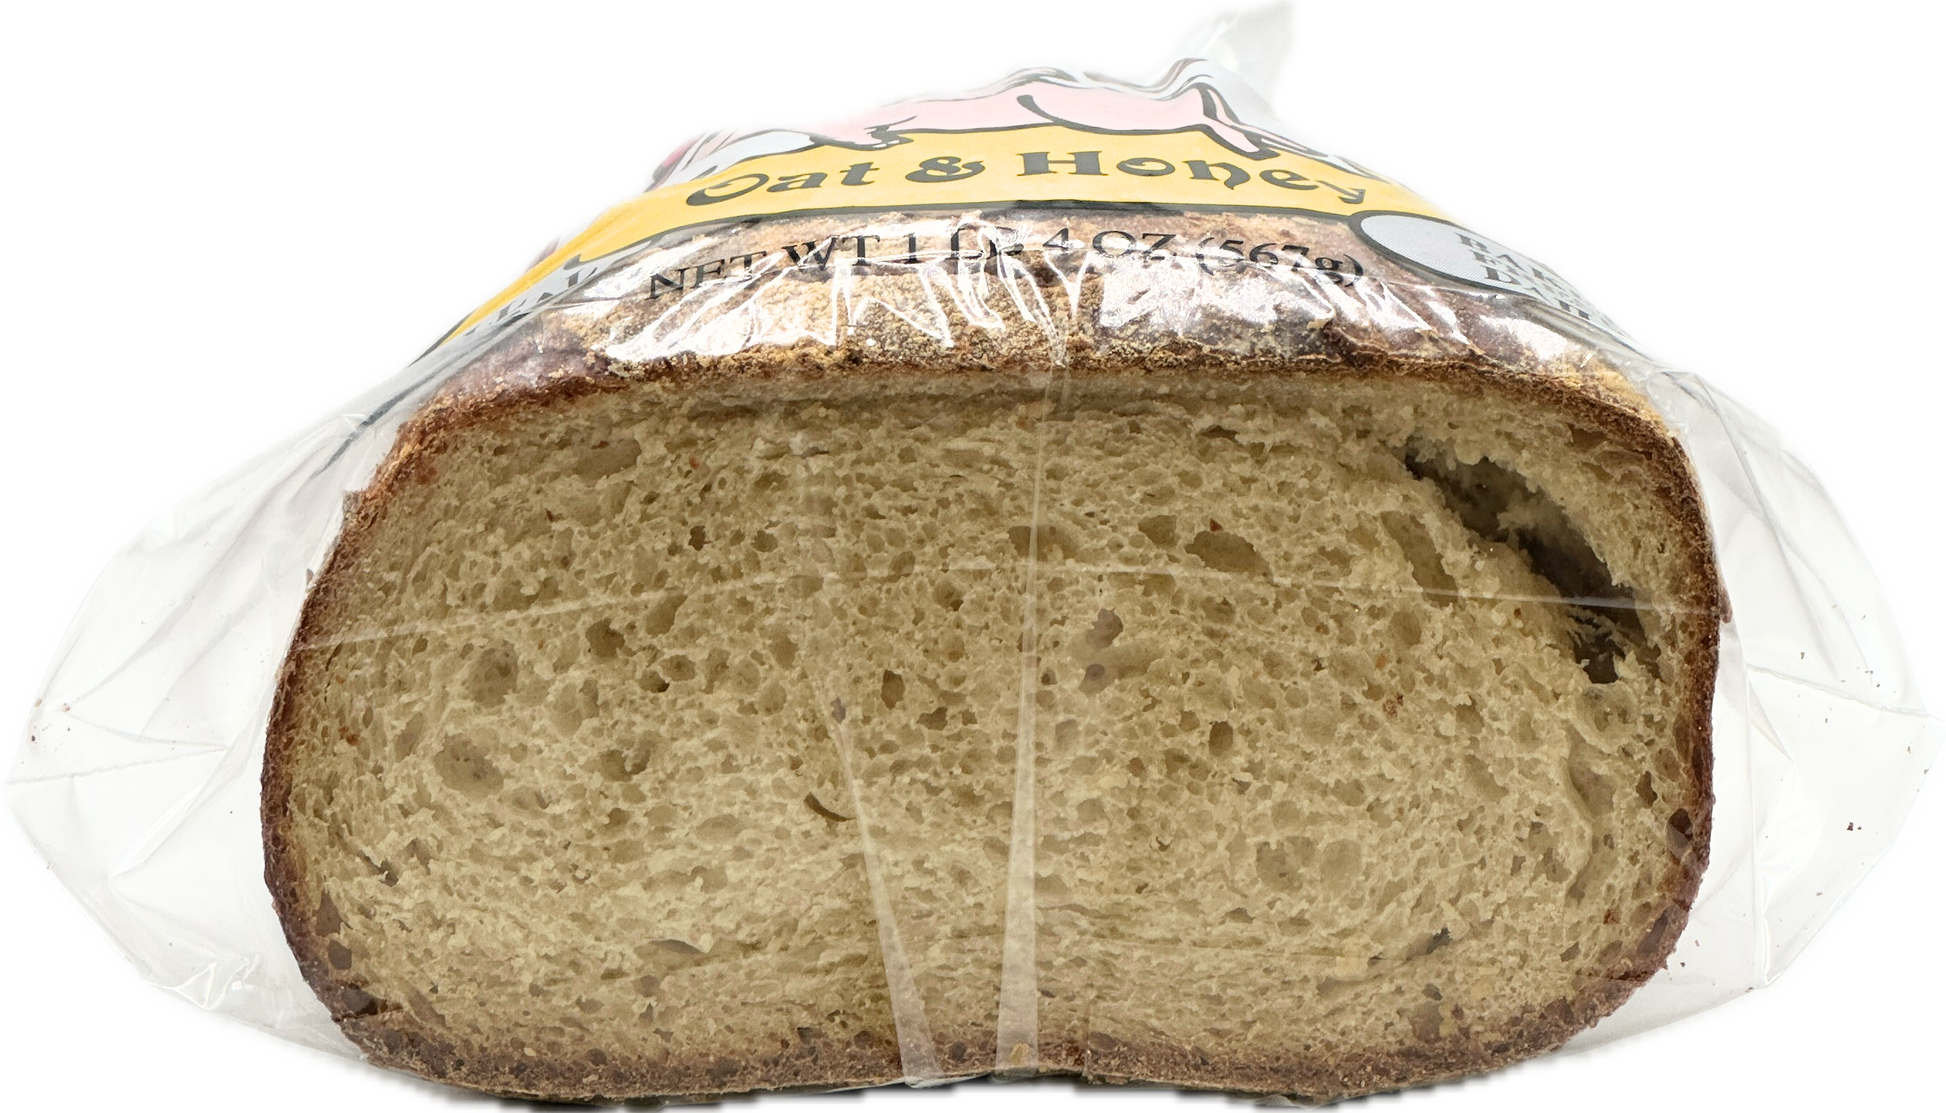 Oat and Honey Bread